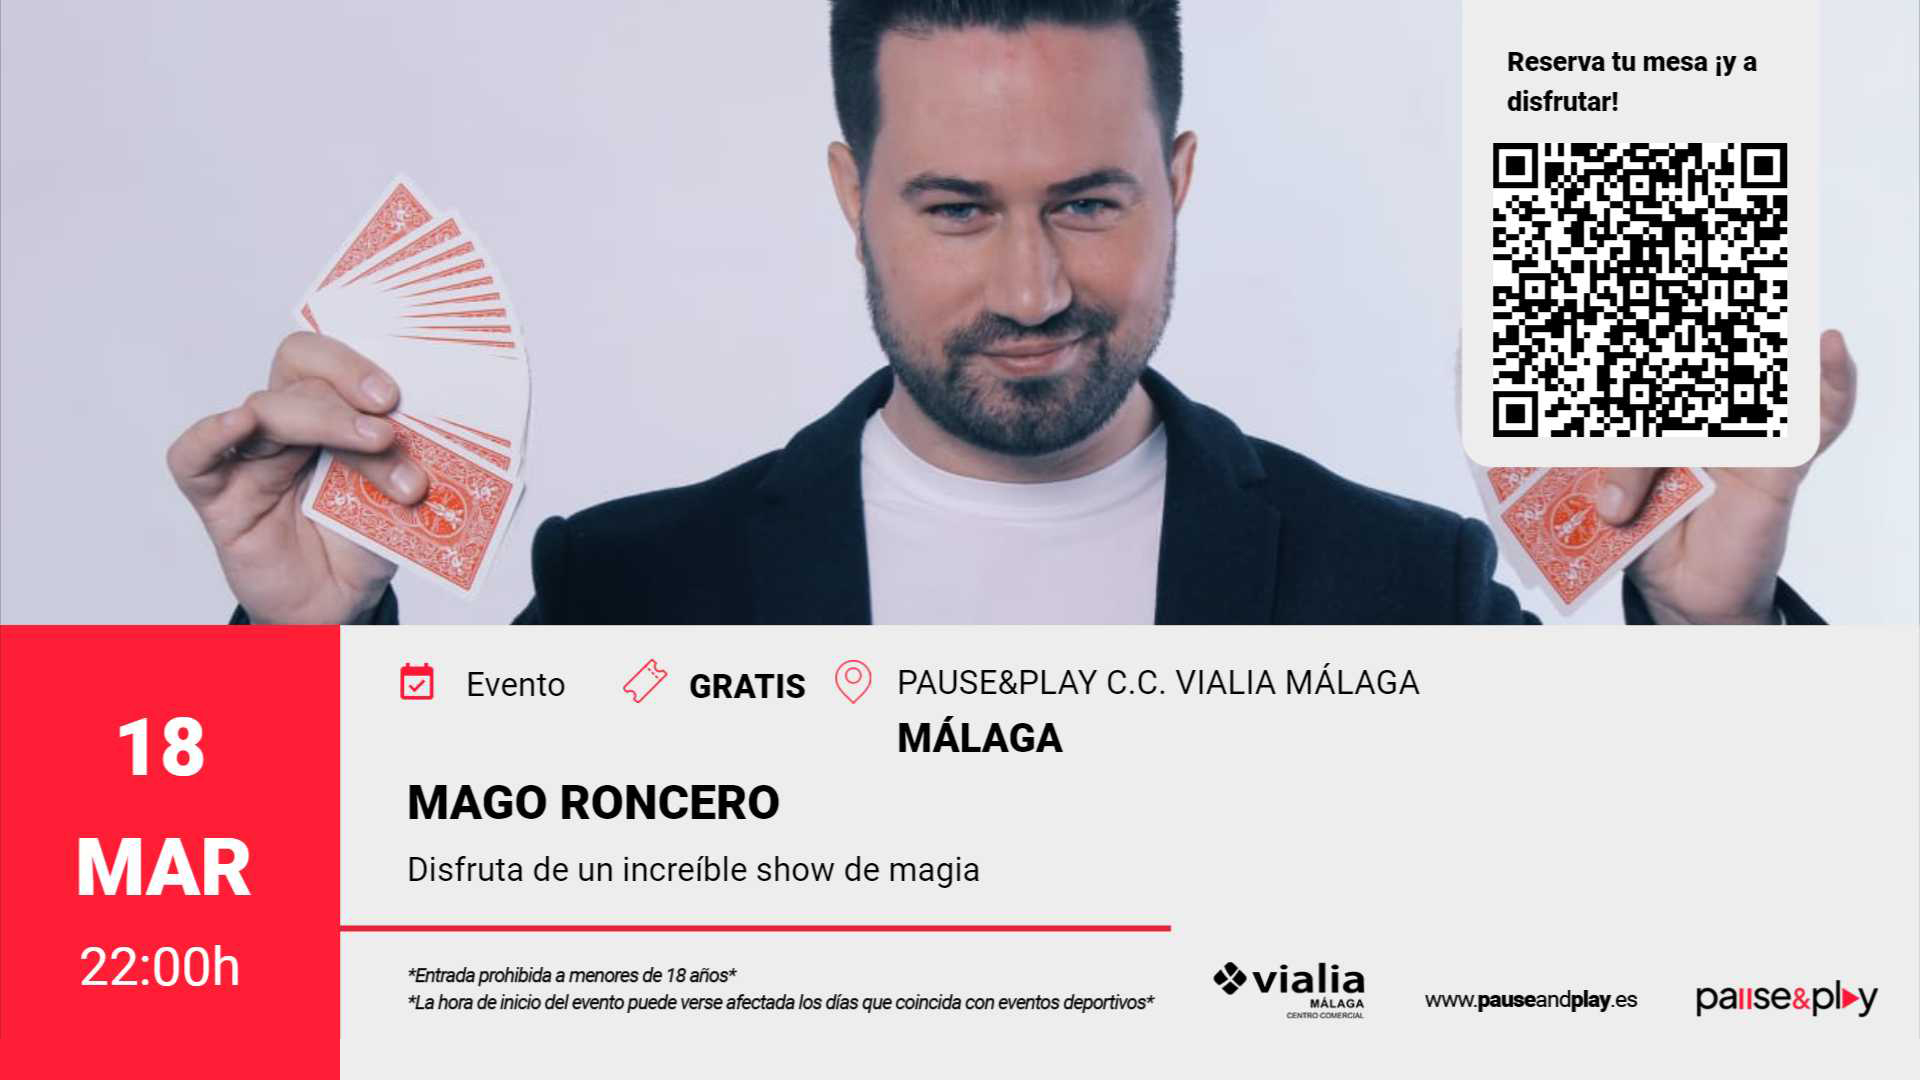 Show de Magia Mago Roncero Pause&Play C.C. Vialia Málaga